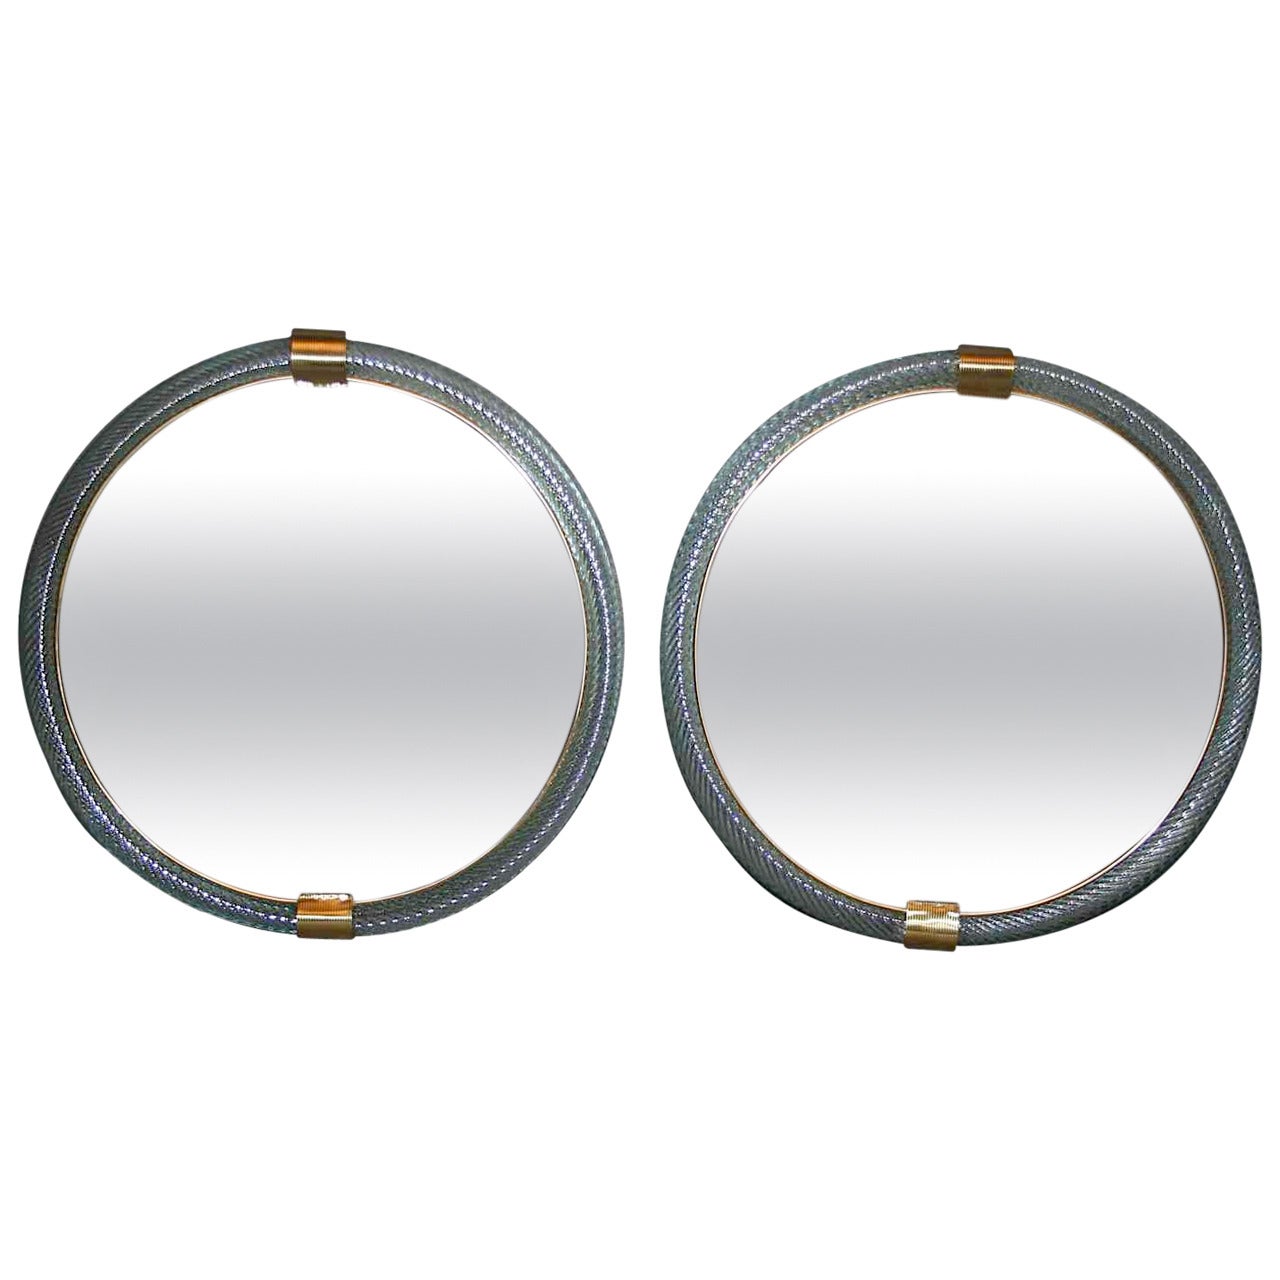 Pair of Mirrors Barovier & Toso